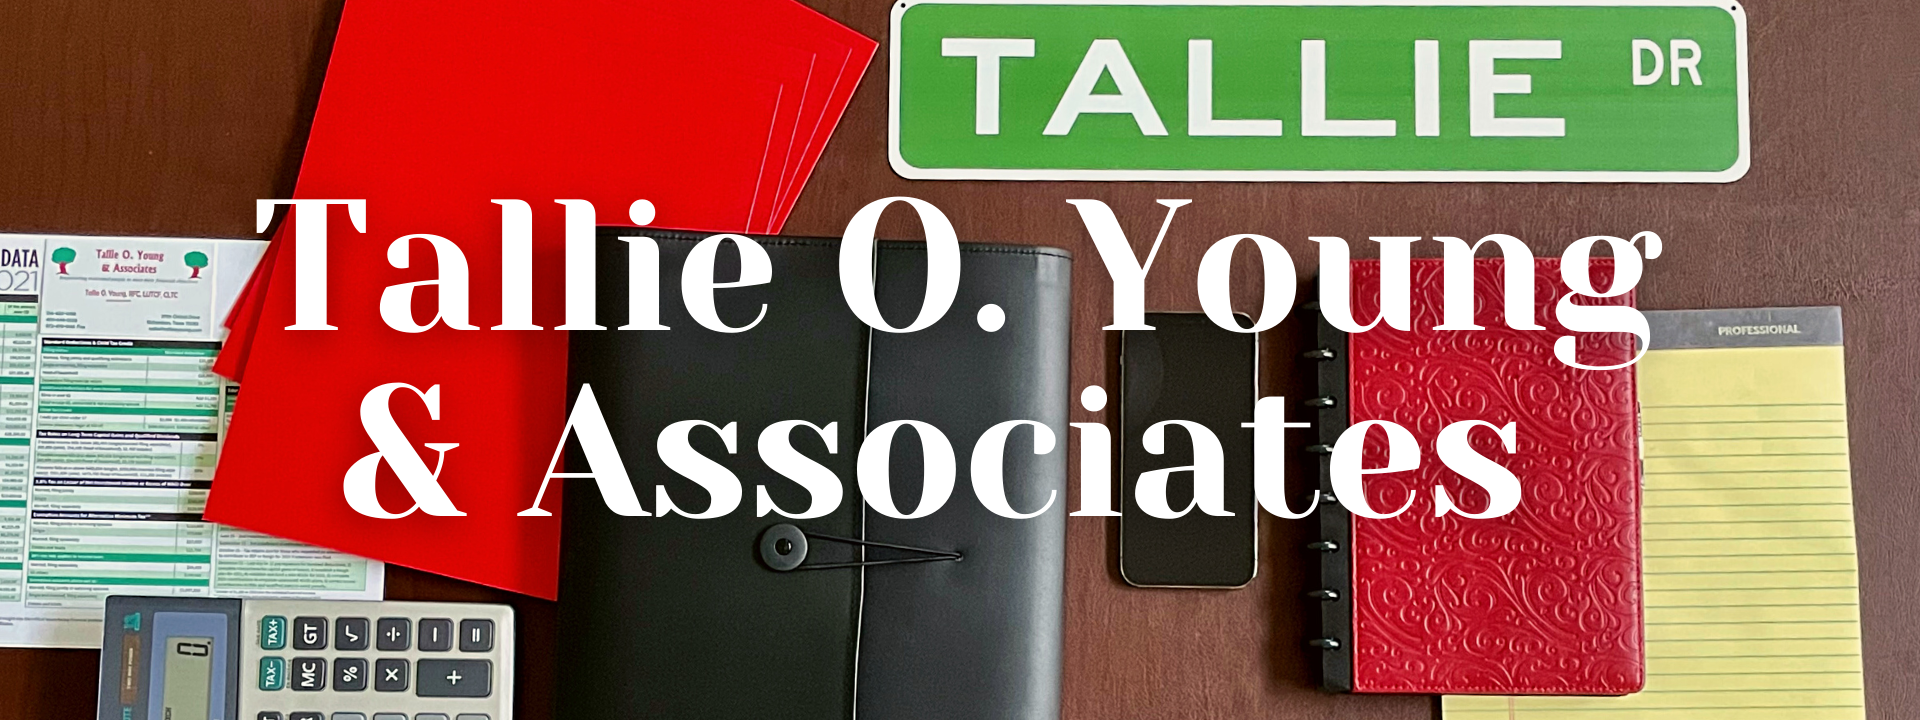 Tallie O. Young & Associates